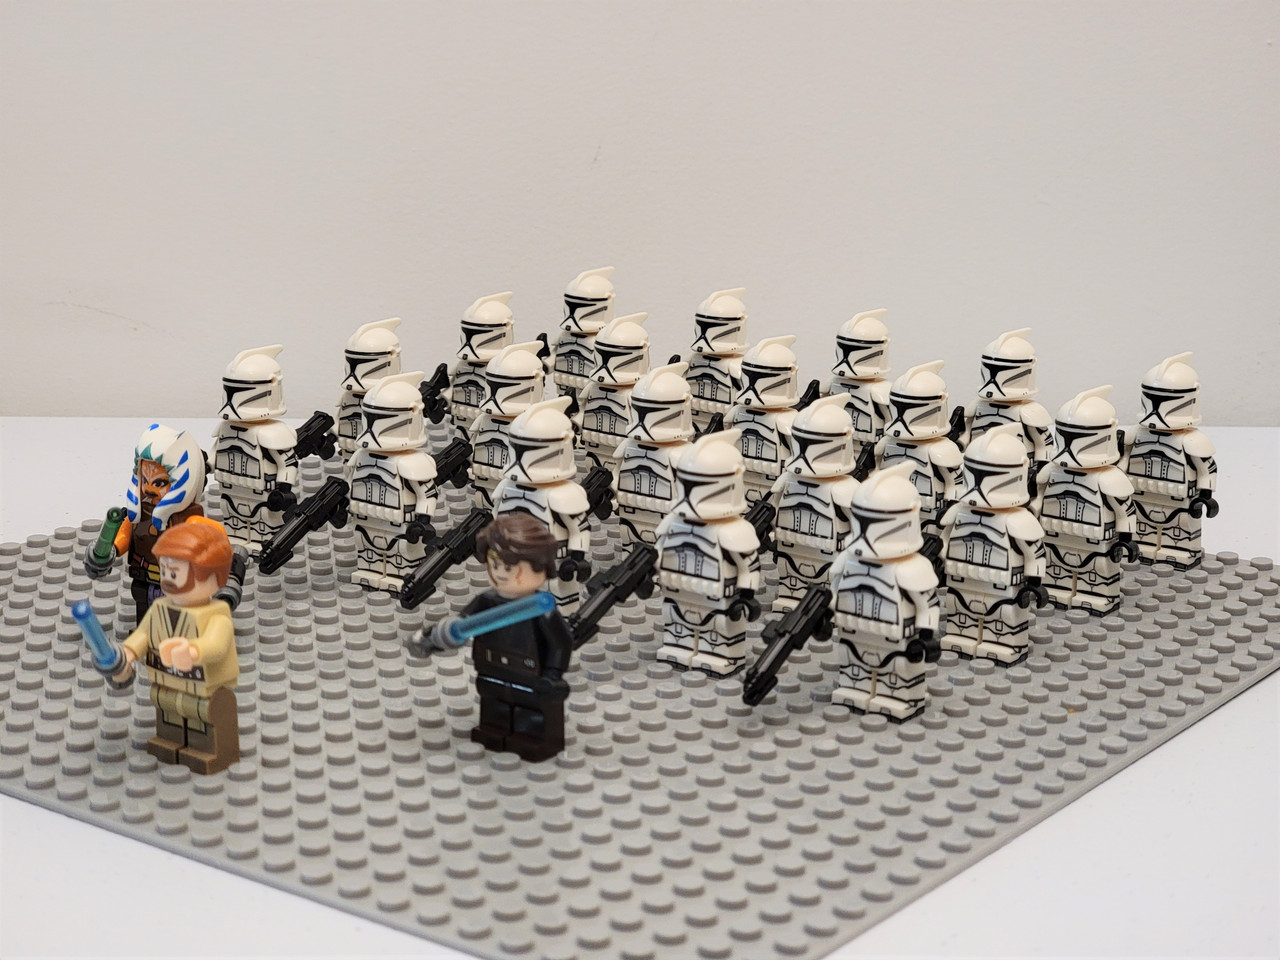 Star Wars 501st Clone Troopers Bulk Army Set 100pcs - J's Little Things